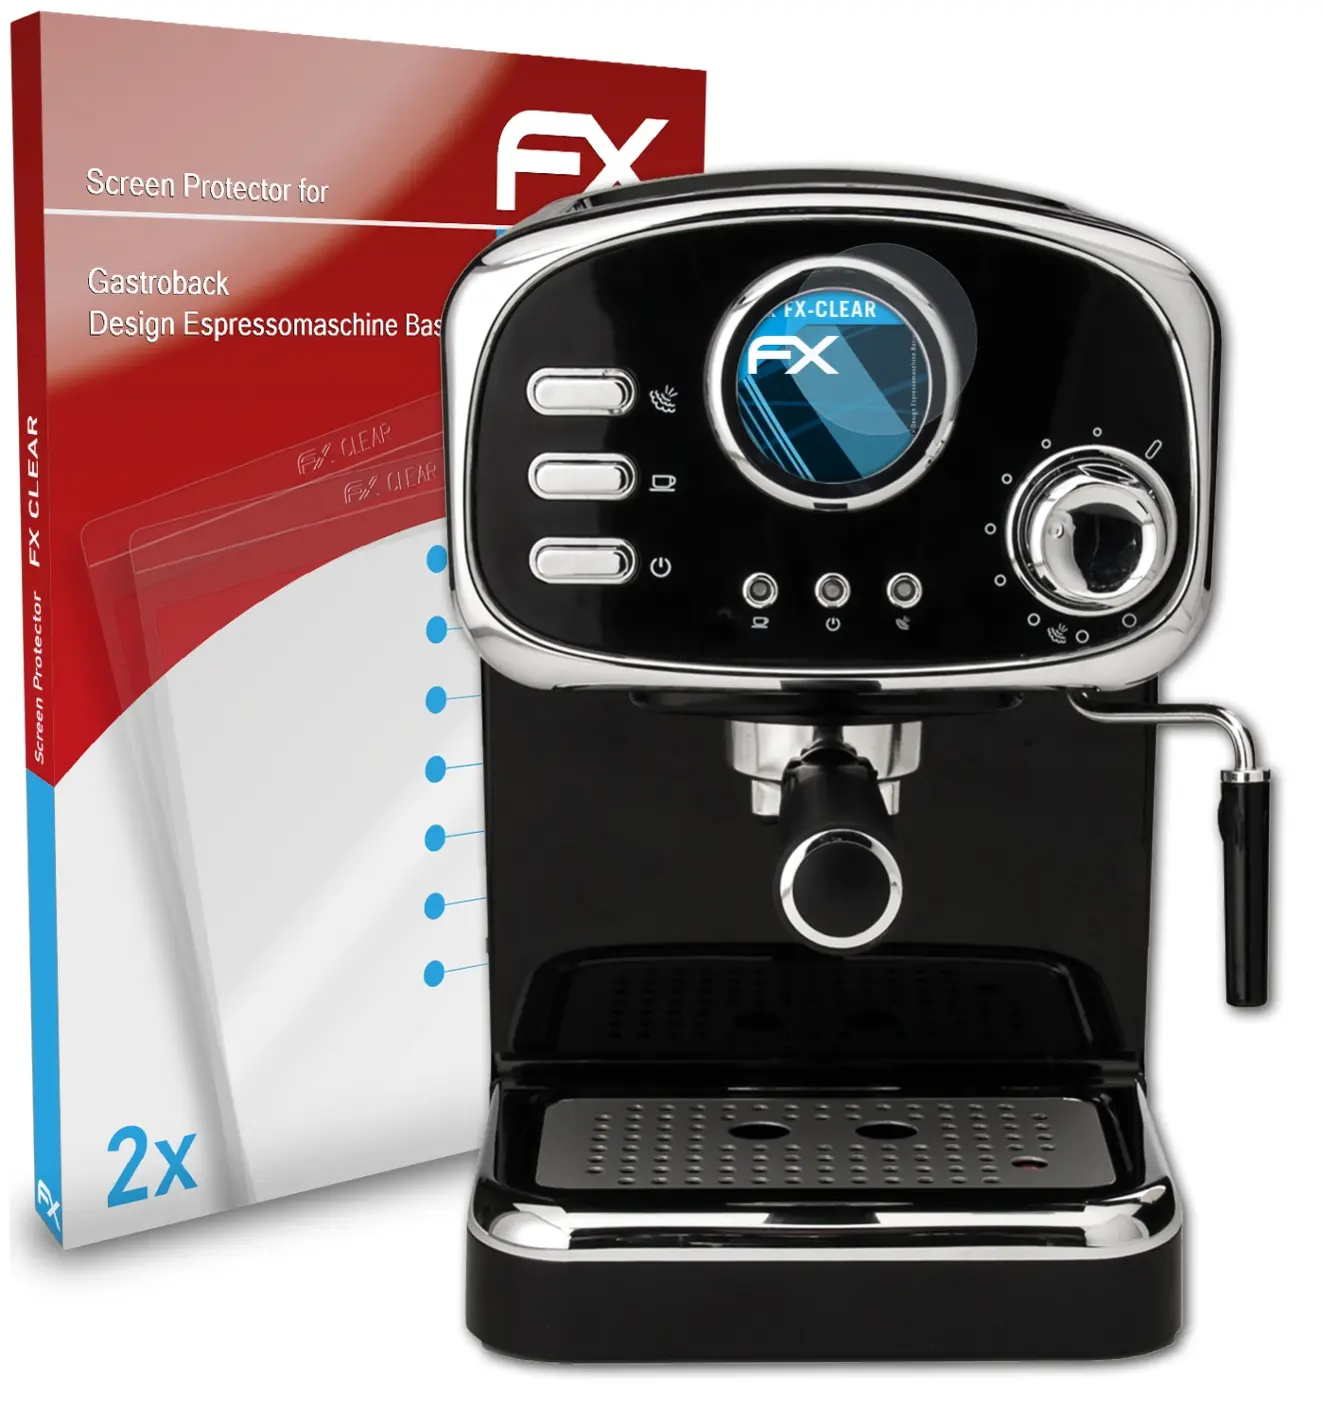 Gastroback Design Espressomaschine Basic 1